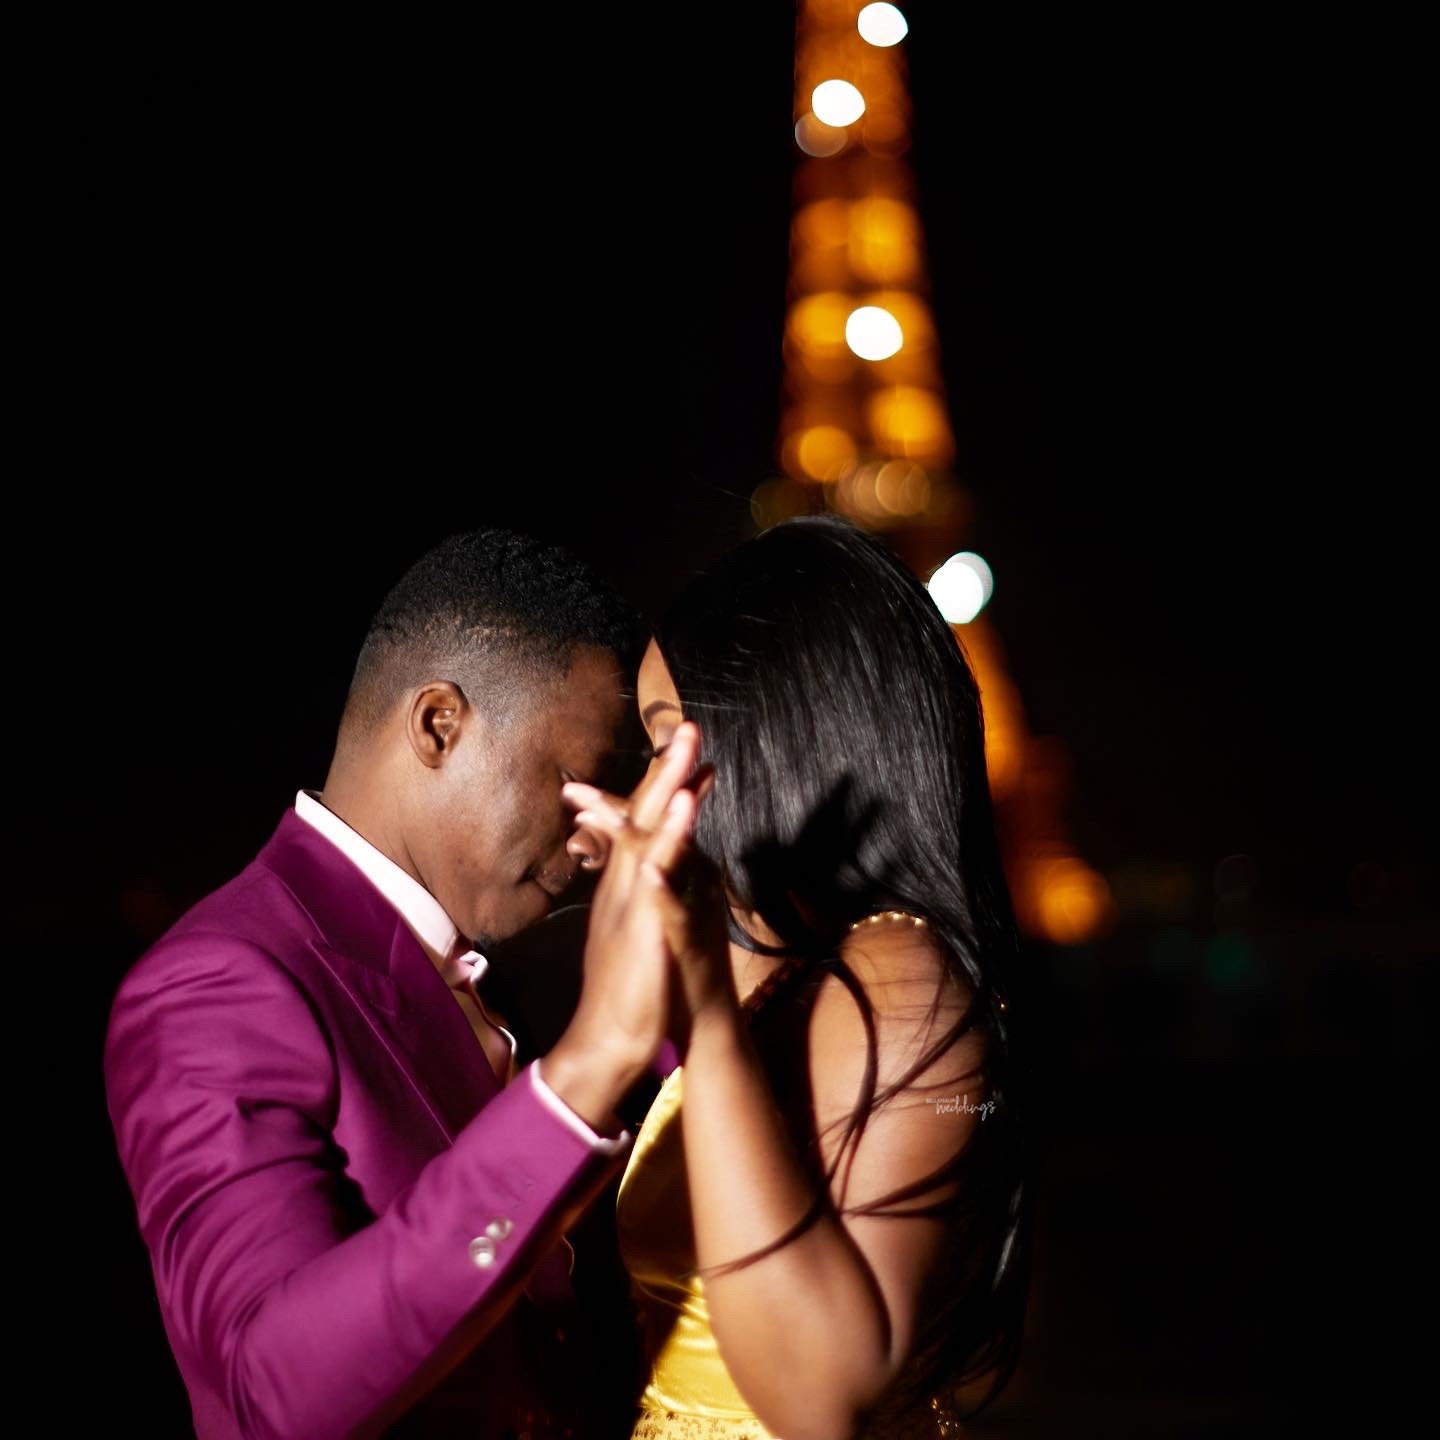 Naija meets Ghana as Nneka is set to wed Kwame. Enjoy their beautiful pre wedding photos